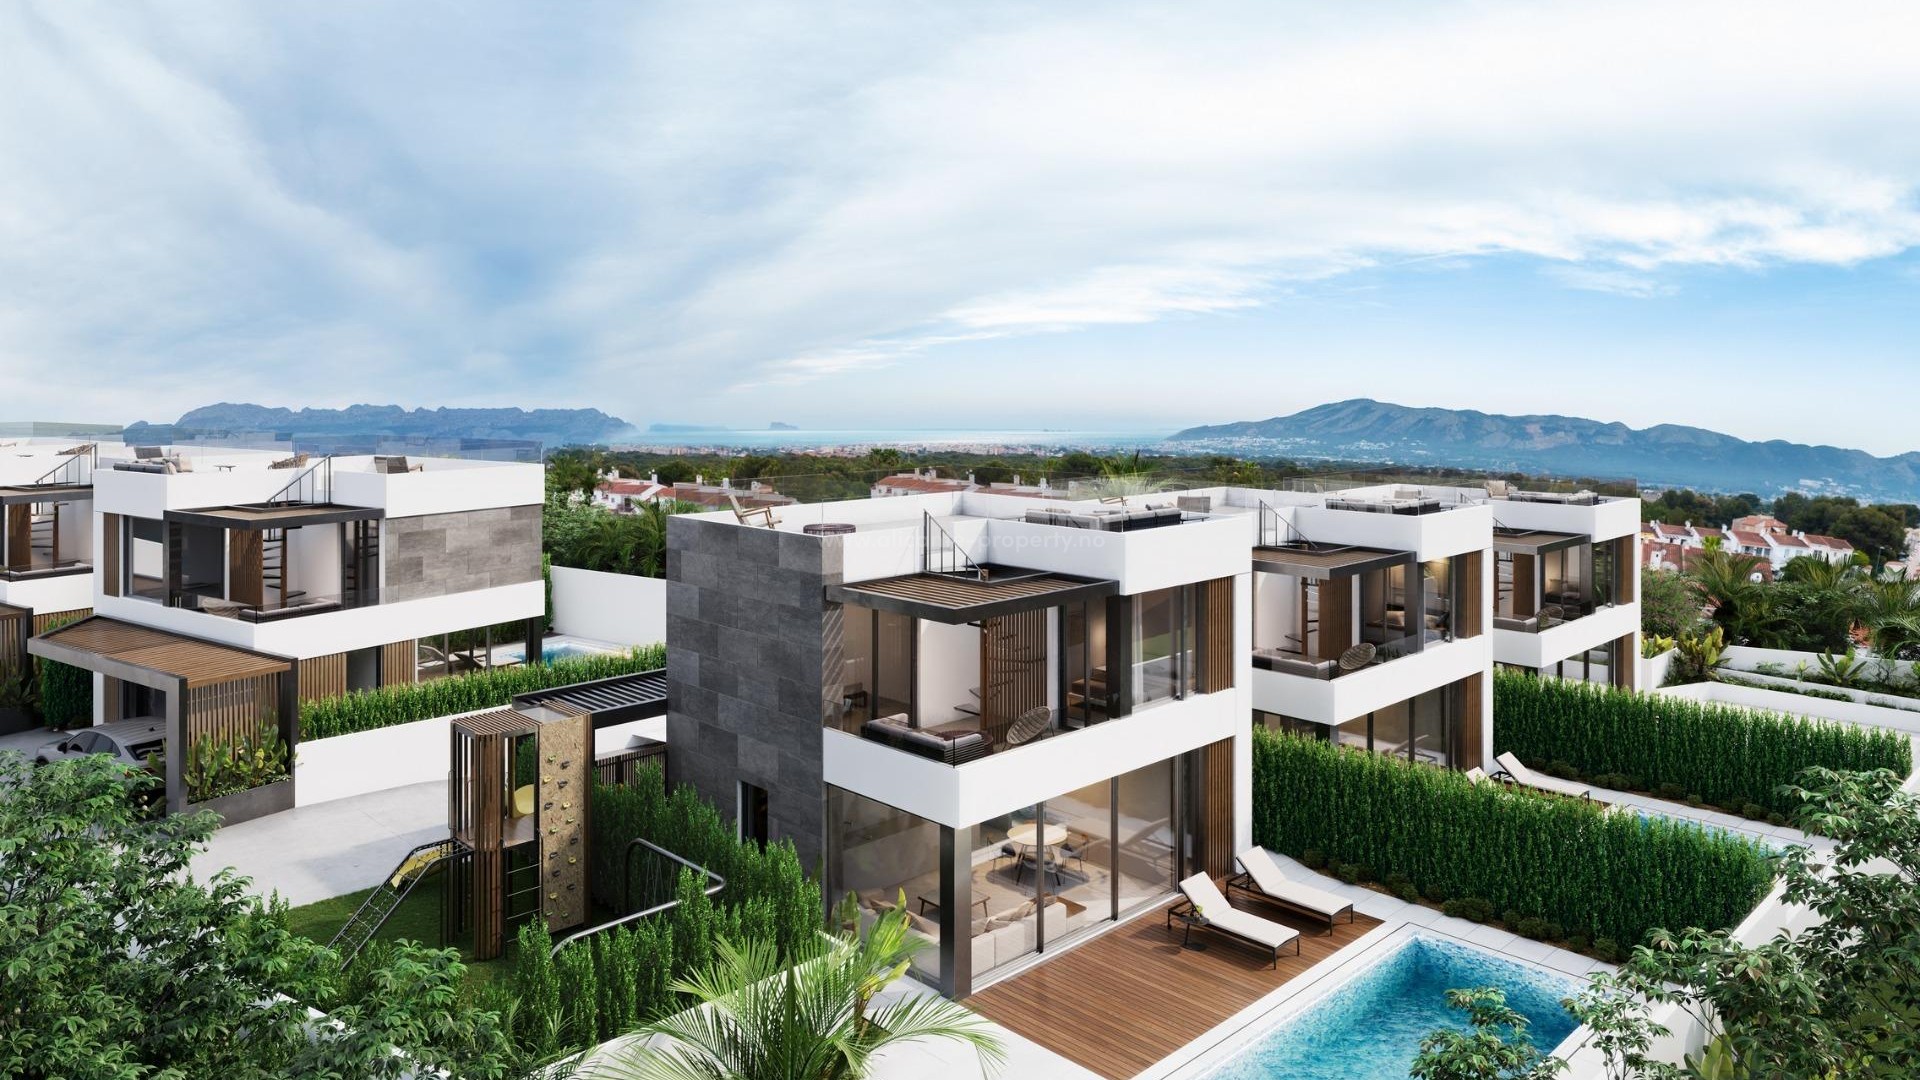 Nye villaer/hus i La Nucia, 3 soverom, 2 bad, terrasse, privat hage med basseng, fantastisk fjellutsikt fra vinduene, mulighet for solarium, egen parkering